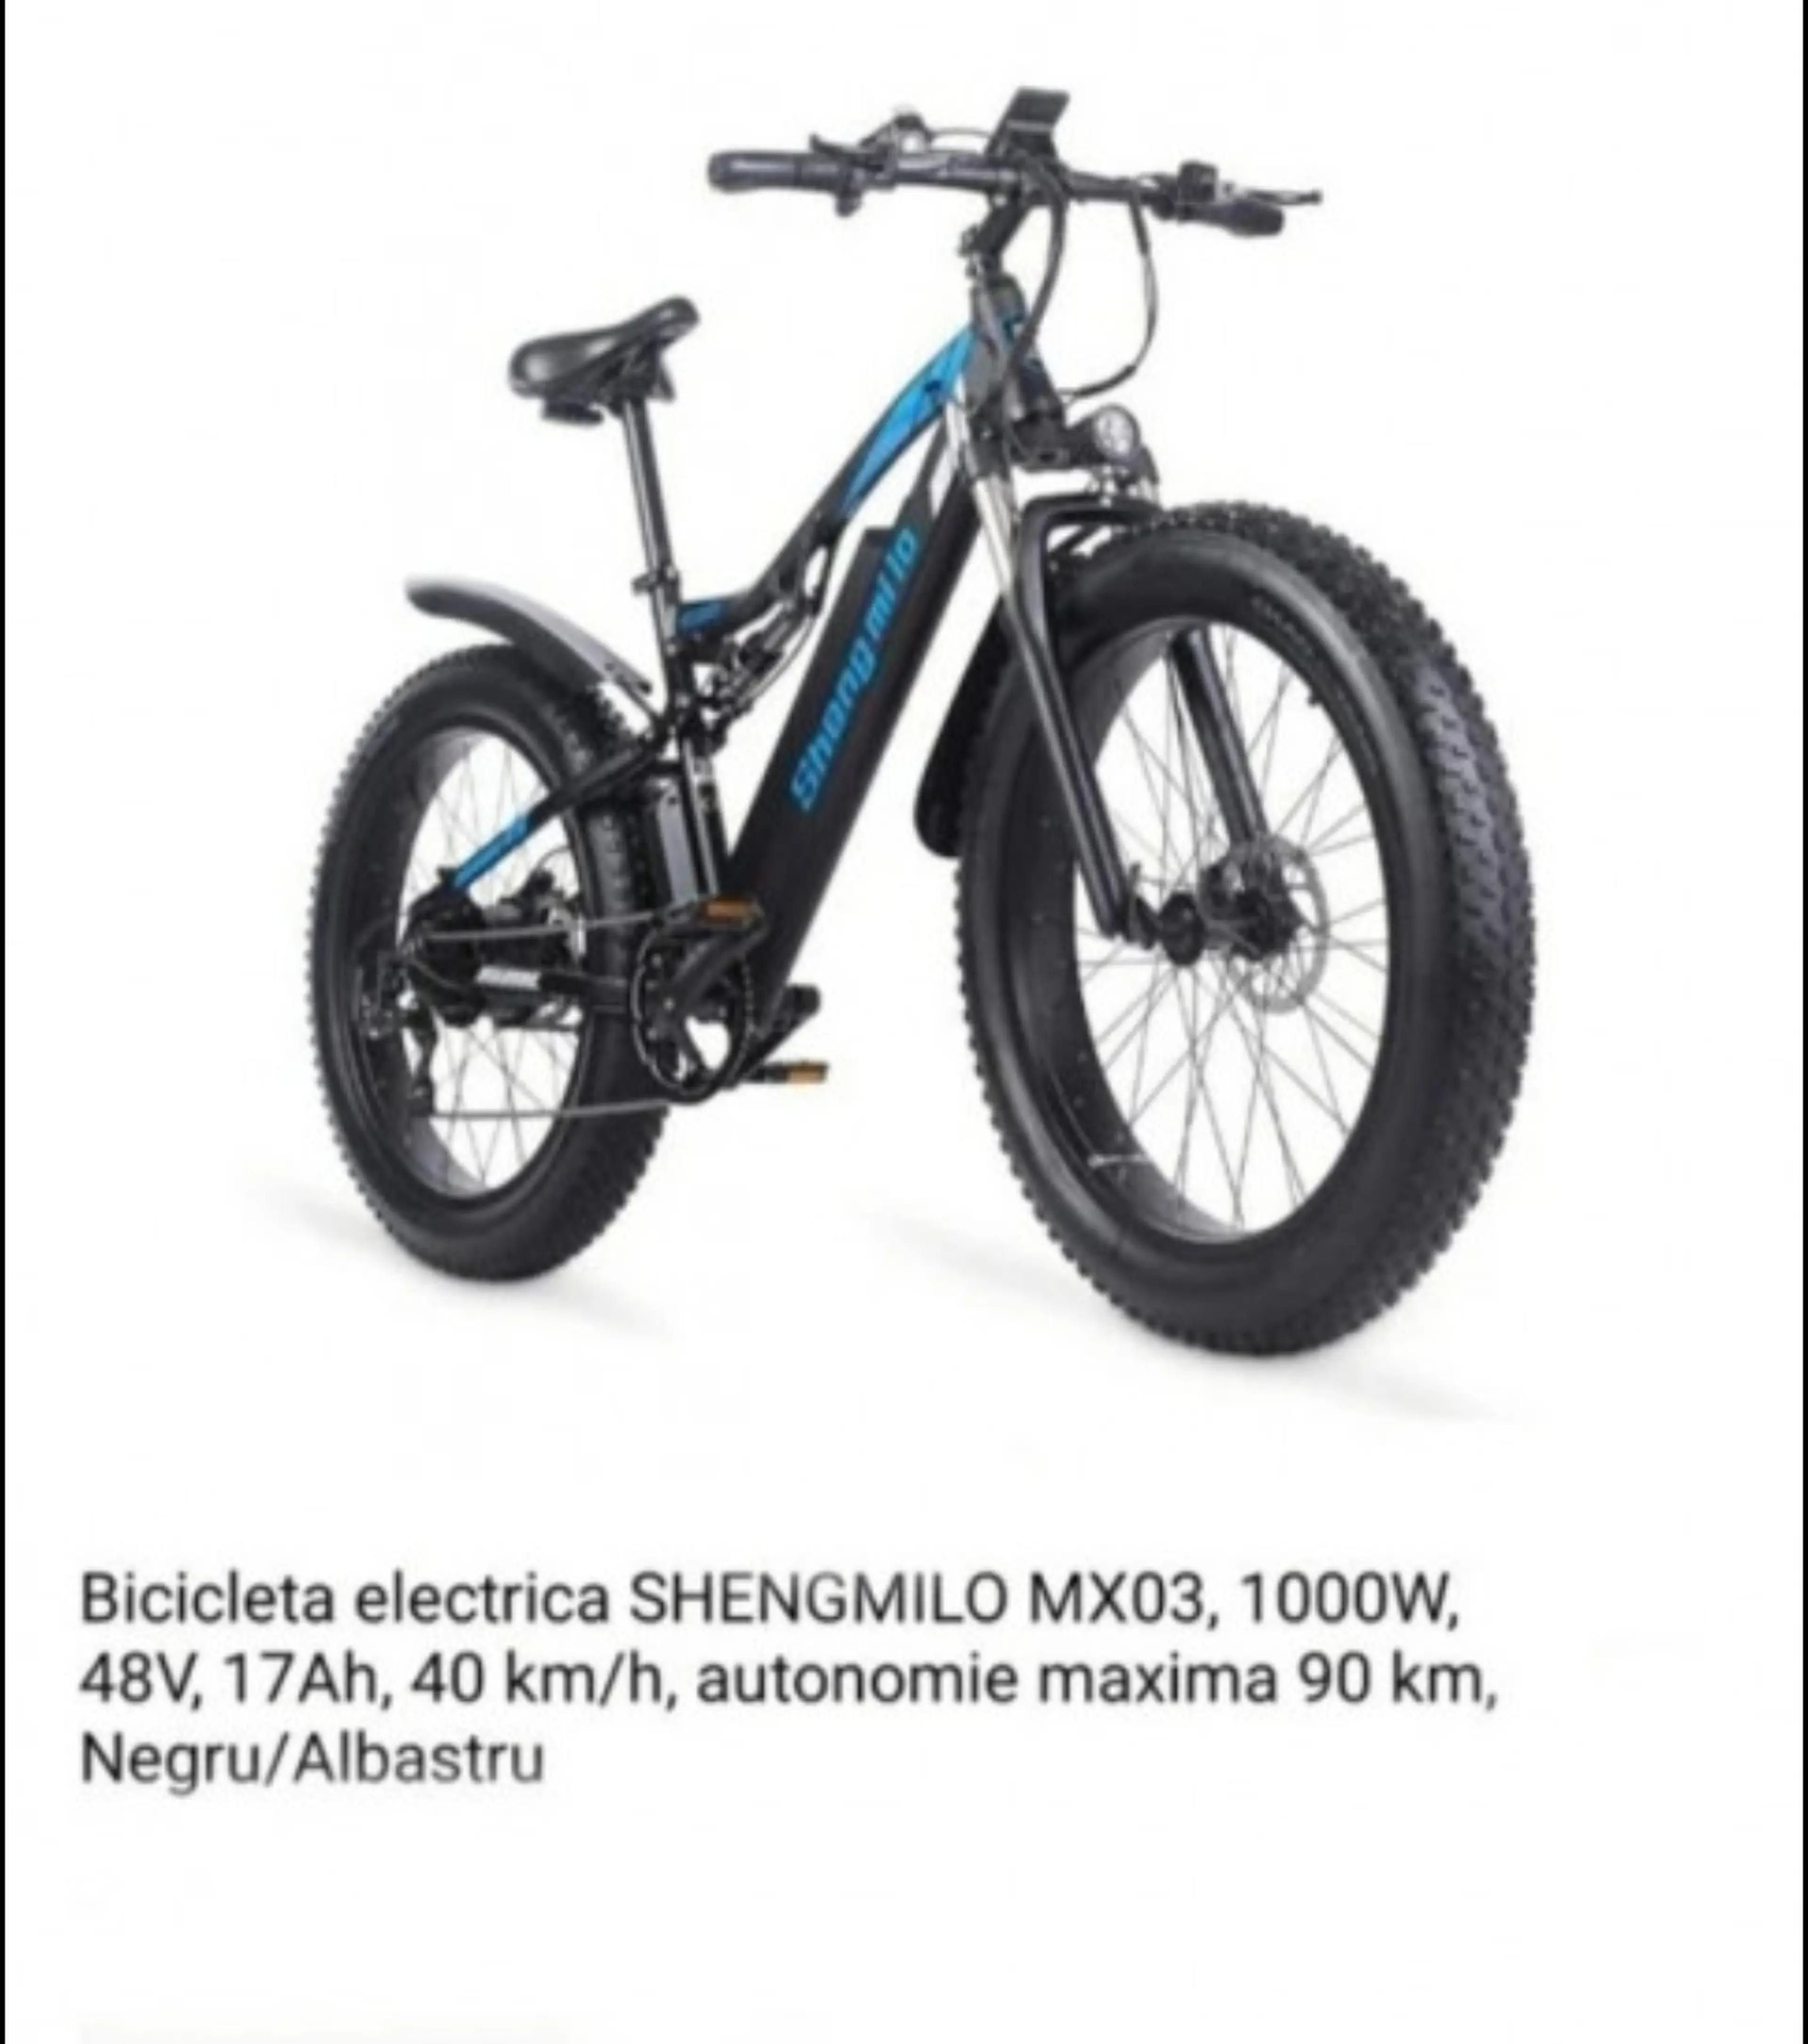 1. Bicicleta electrica, Shengmilo MX03, Motor 1000W